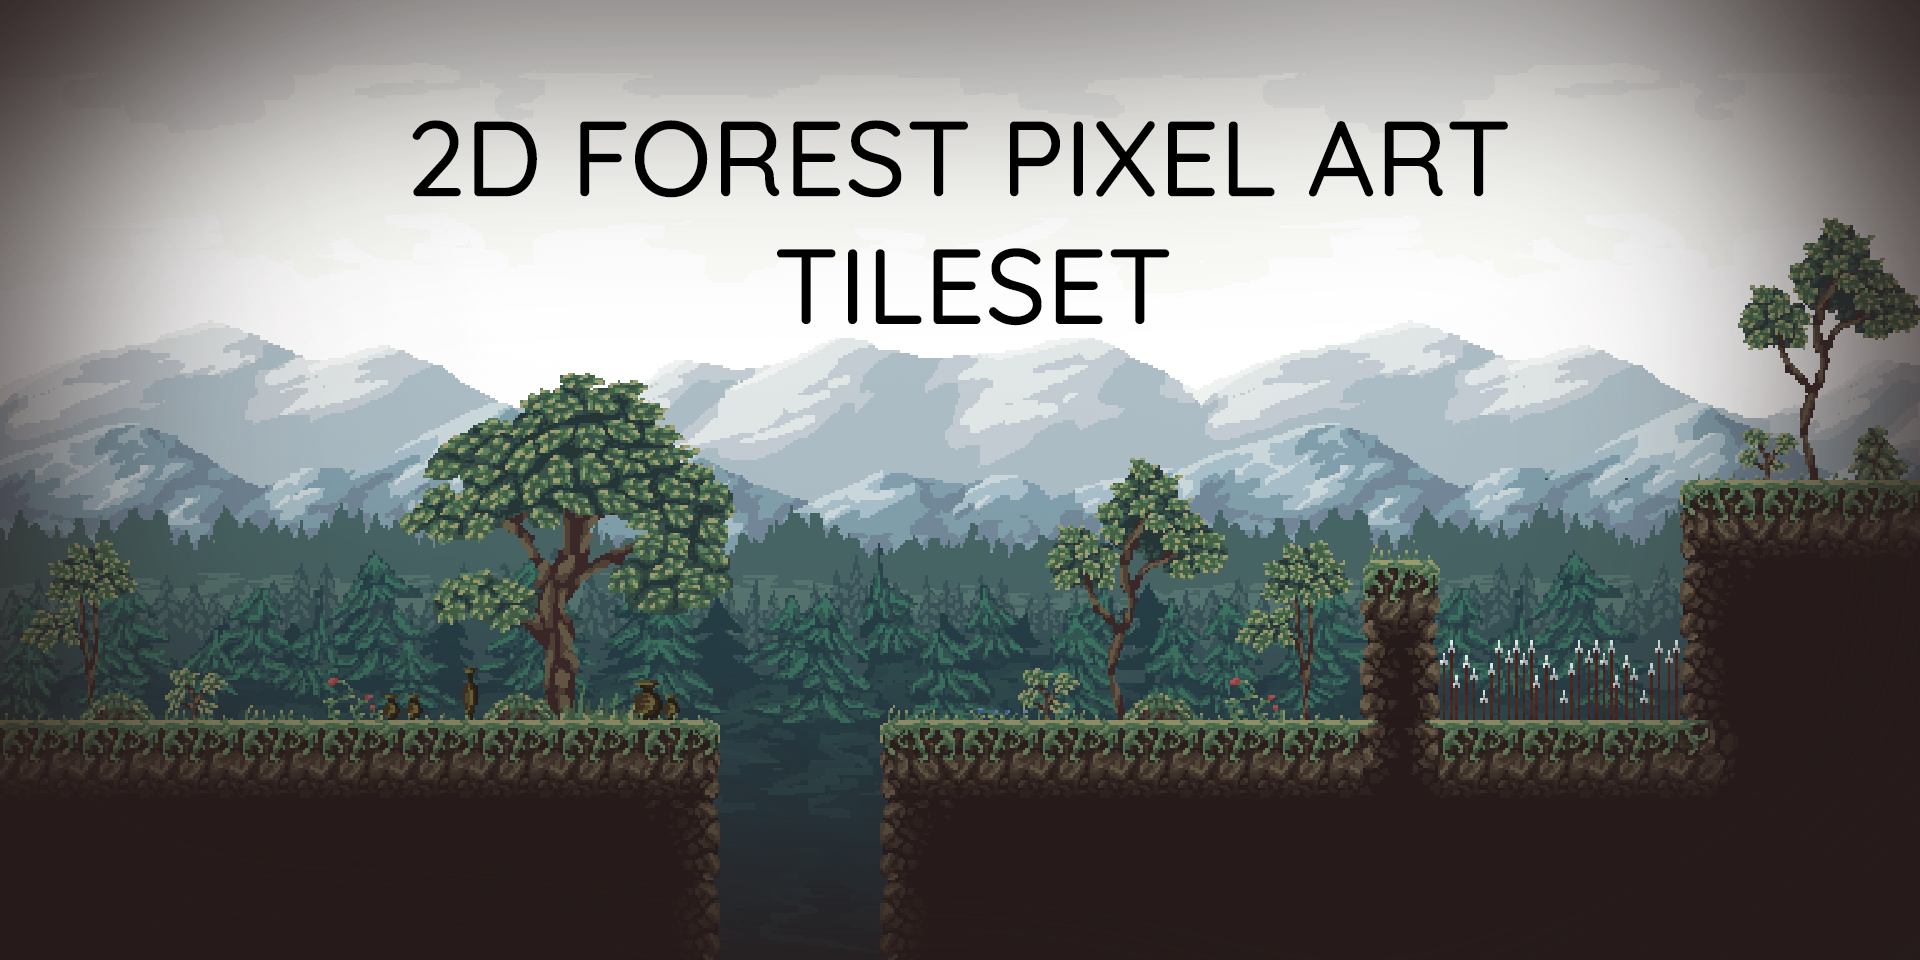 2d Forest Pixel Art Tileset By Nortexmkd